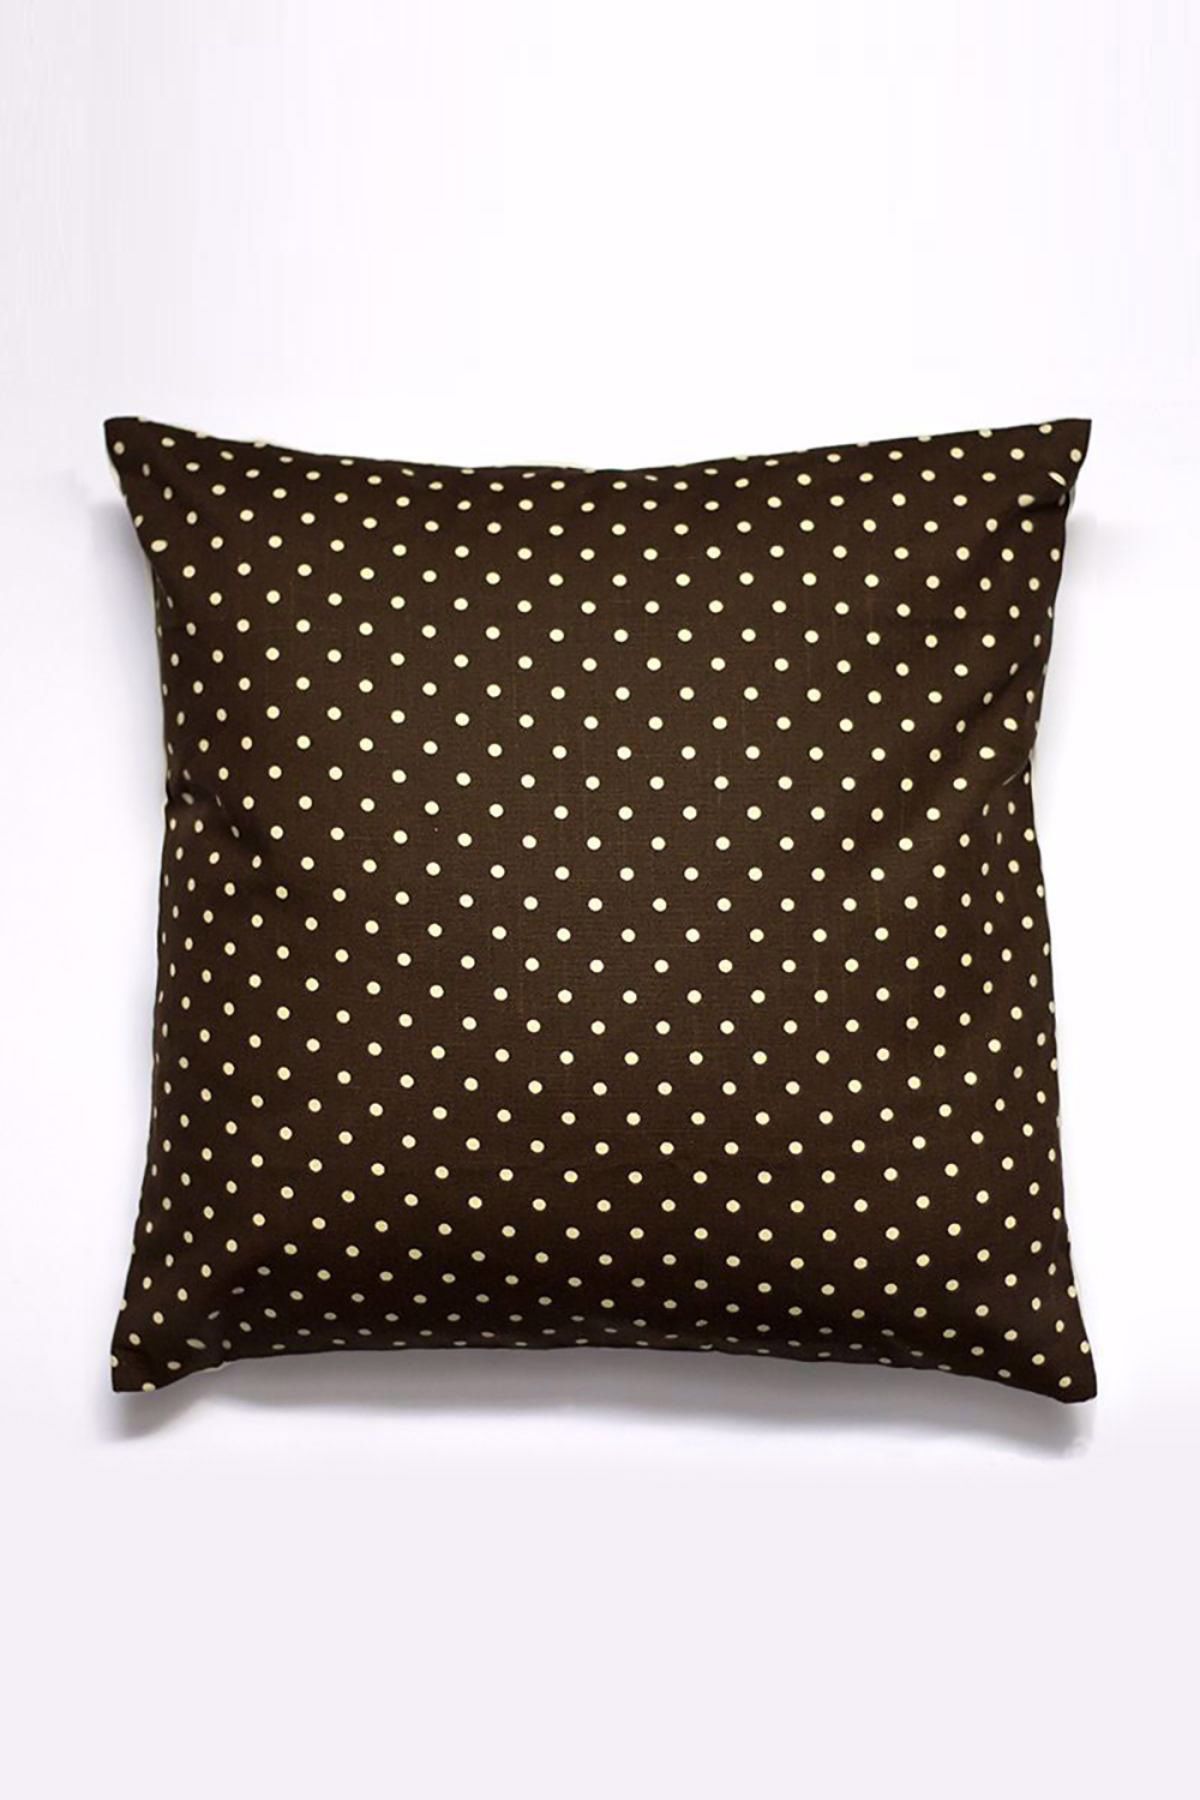 Polka Dots Cushion Cover - Brown